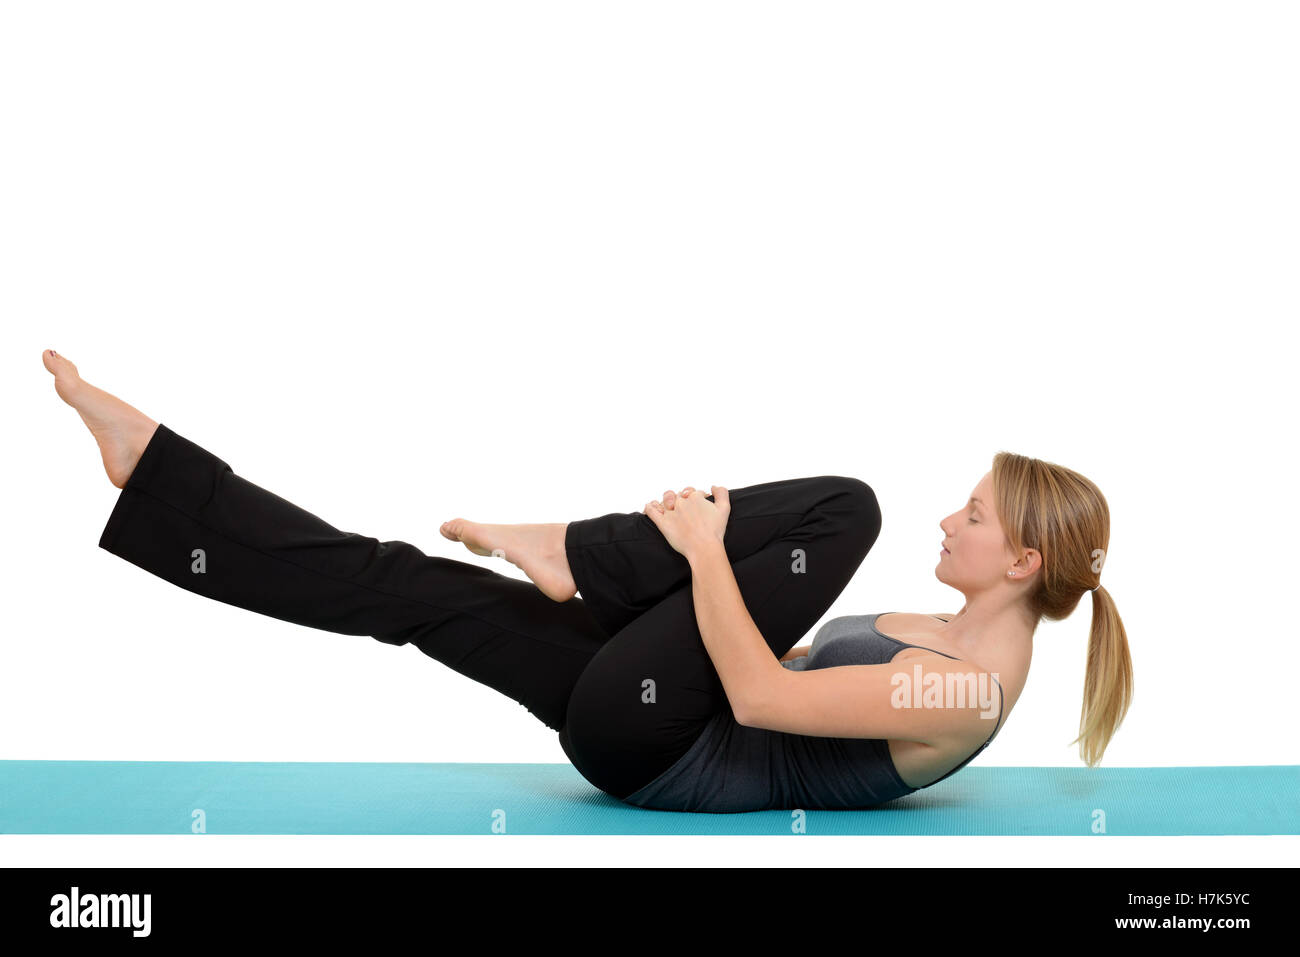 https://c8.alamy.com/comp/H7K5YC/woman-doing-pilates-single-leg-stretch-H7K5YC.jpg